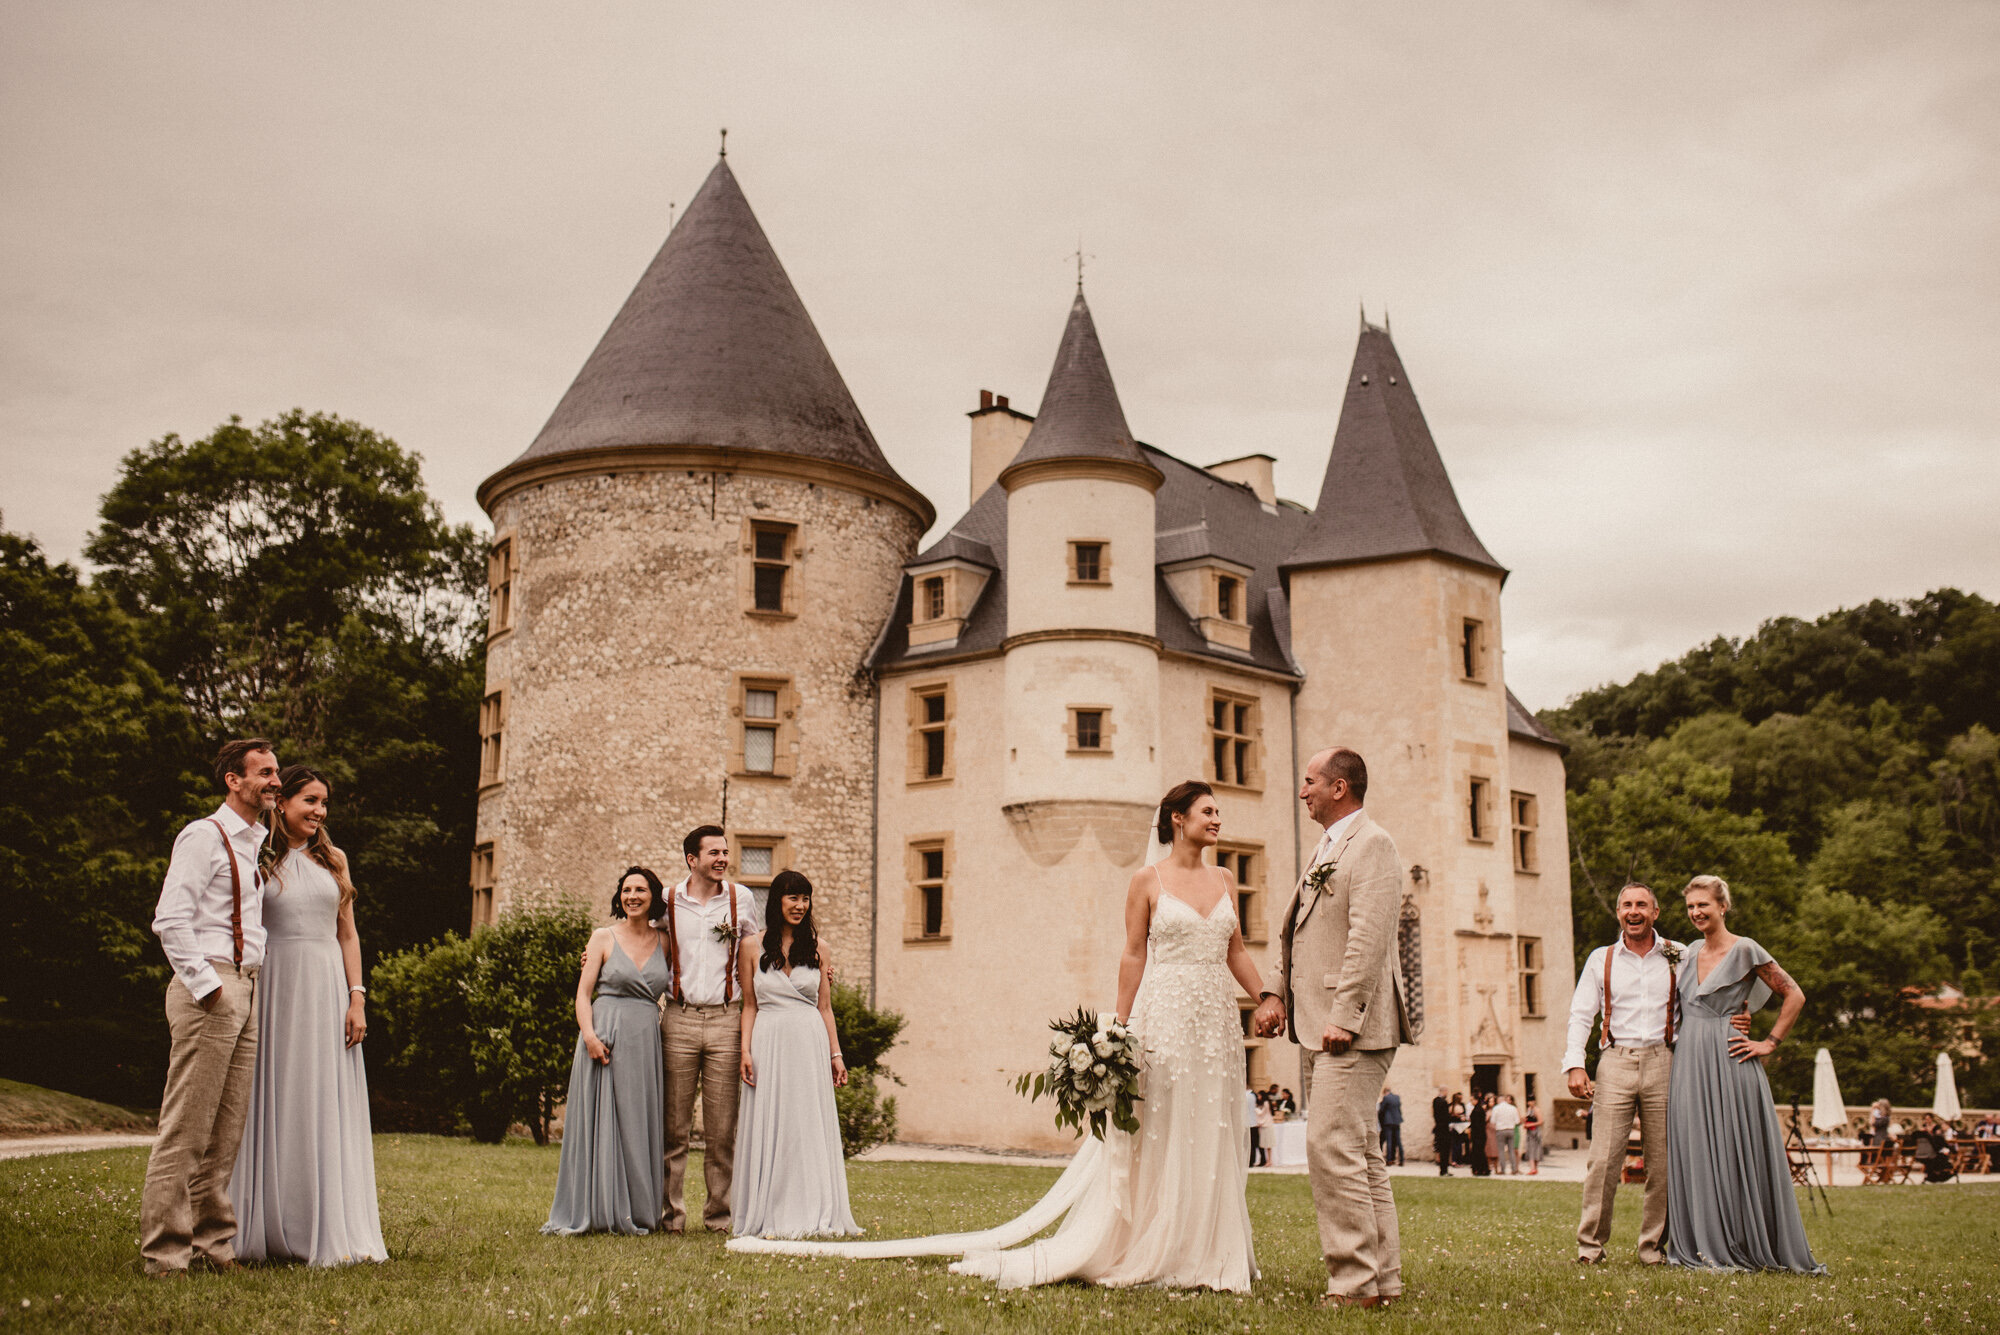 Ivonna & Jason - Wedding photographer Saint Martory - Marriage Chateau Saint Martory  - Destination wedding photographer - ARTEFOTO665.jpg